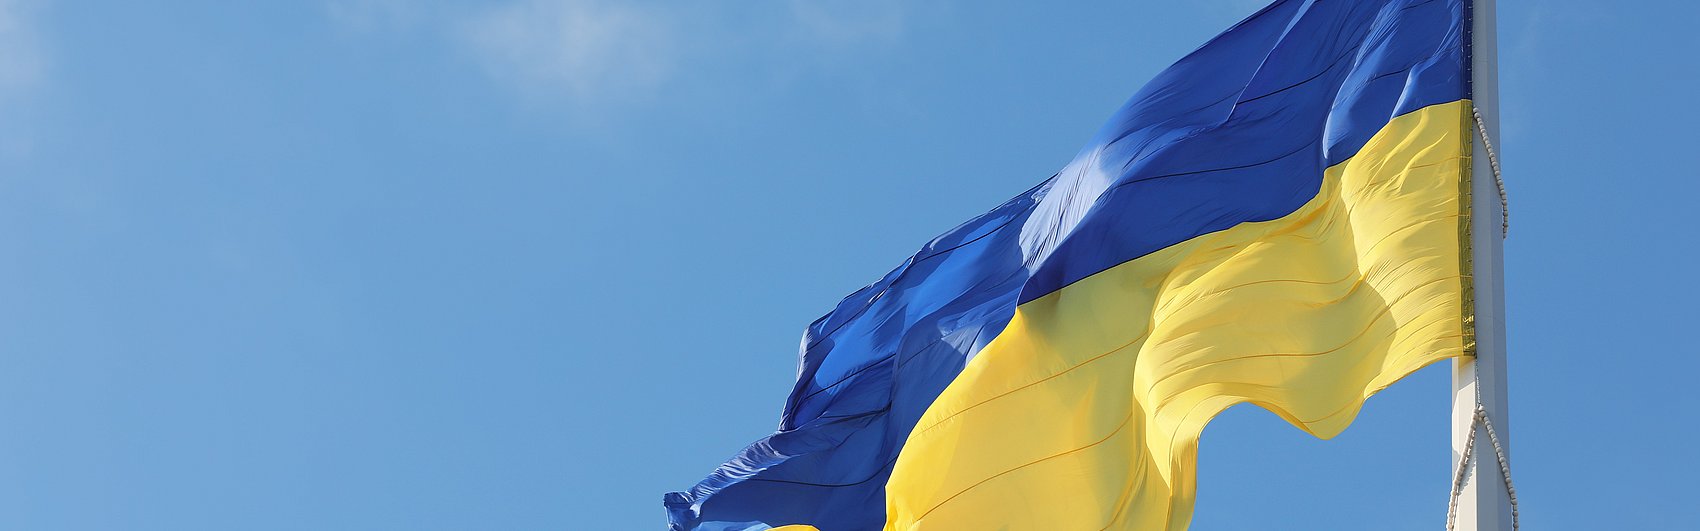 csm_Ukraine_flag_3aac2e4b28.jpeg